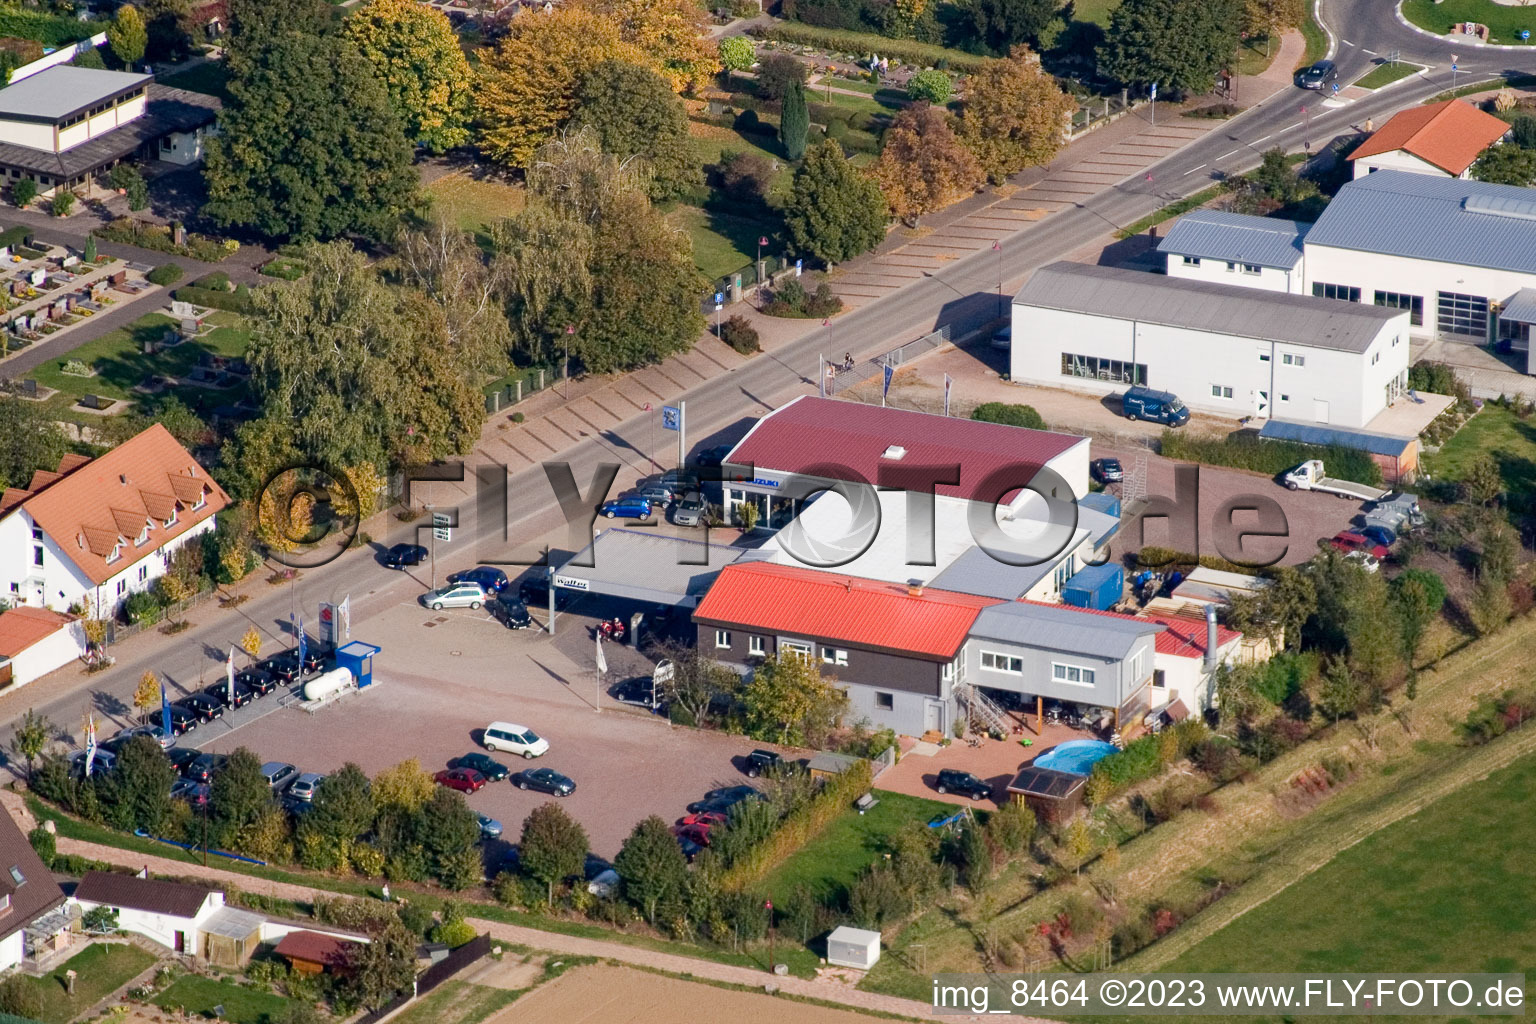 Aerial view of Frank car dealership in Steinweiler in the state Rhineland-Palatinate, Germany